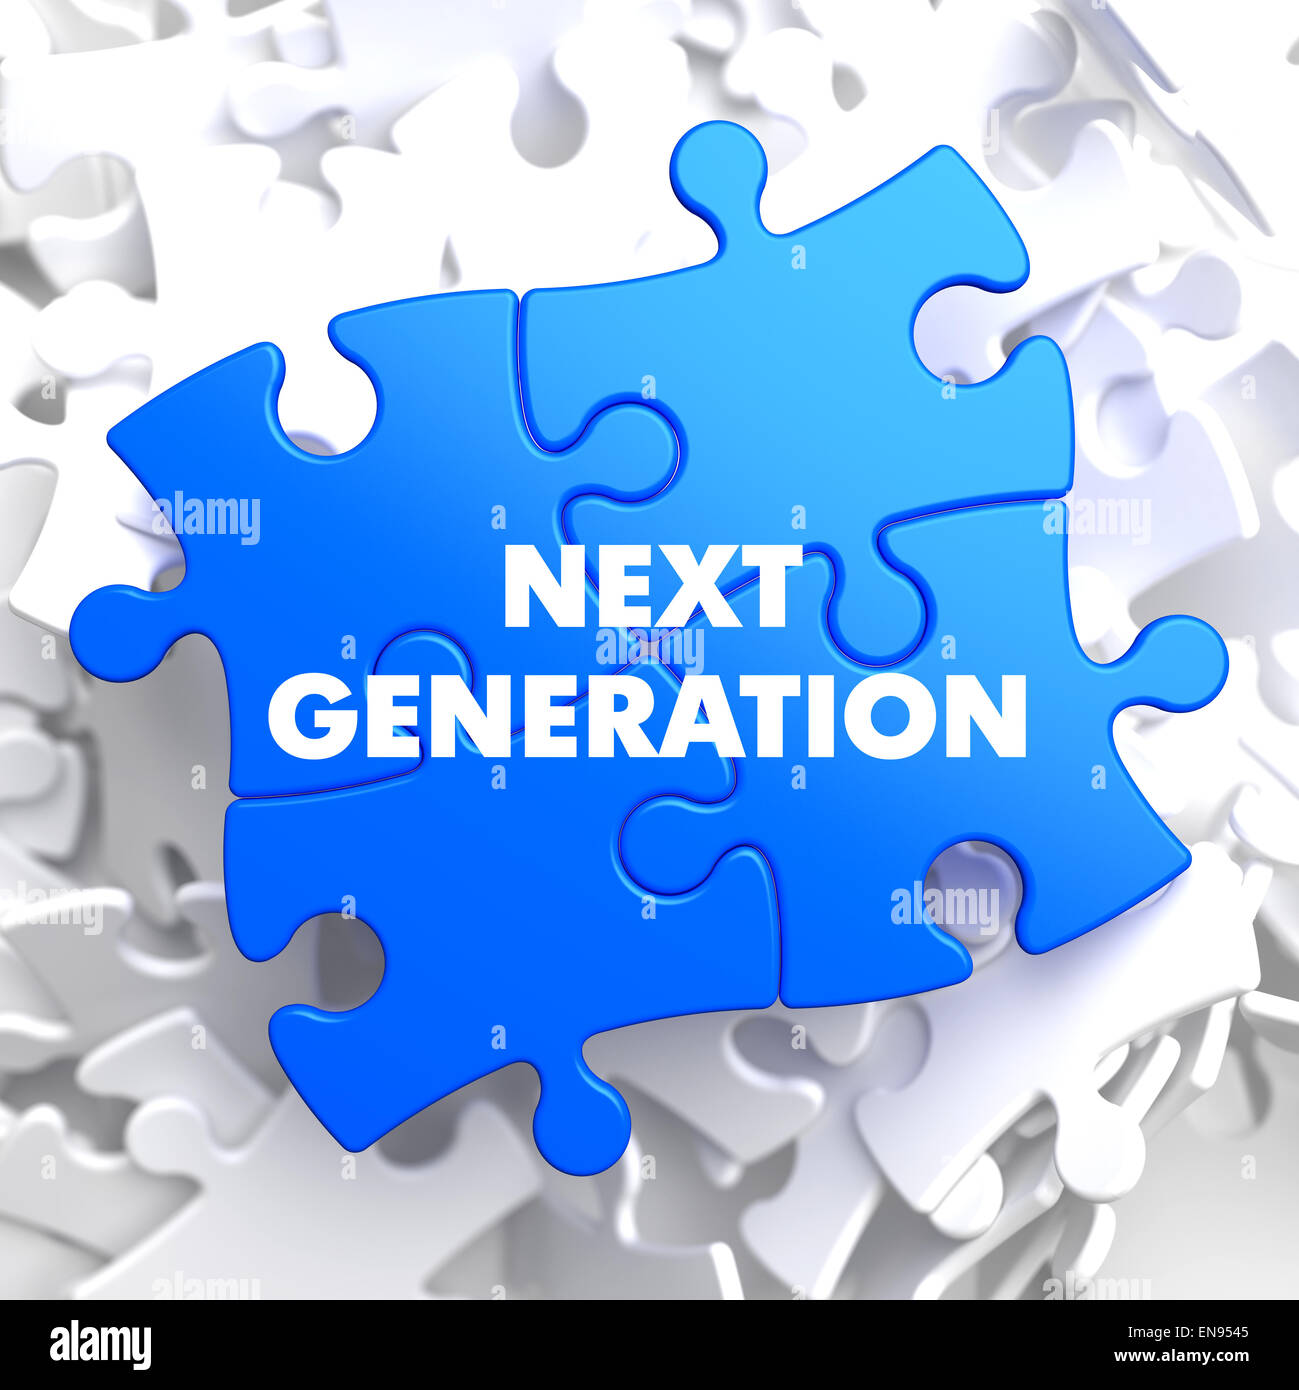 Next Generation on Blue Puzzle. Stock Photo